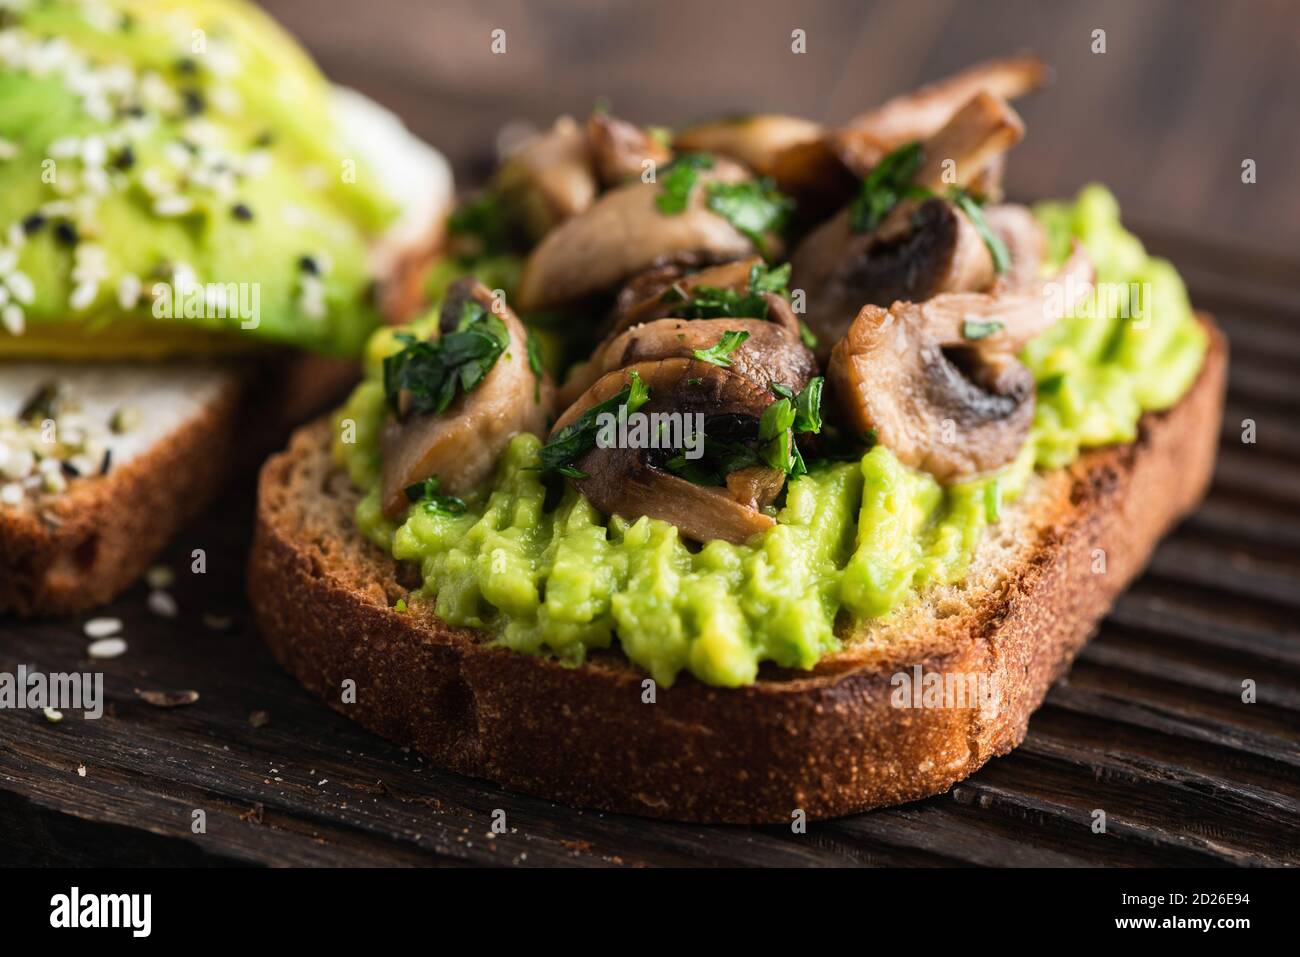 Tasty avocado toast with fried mushrooms and greens Stock Photo